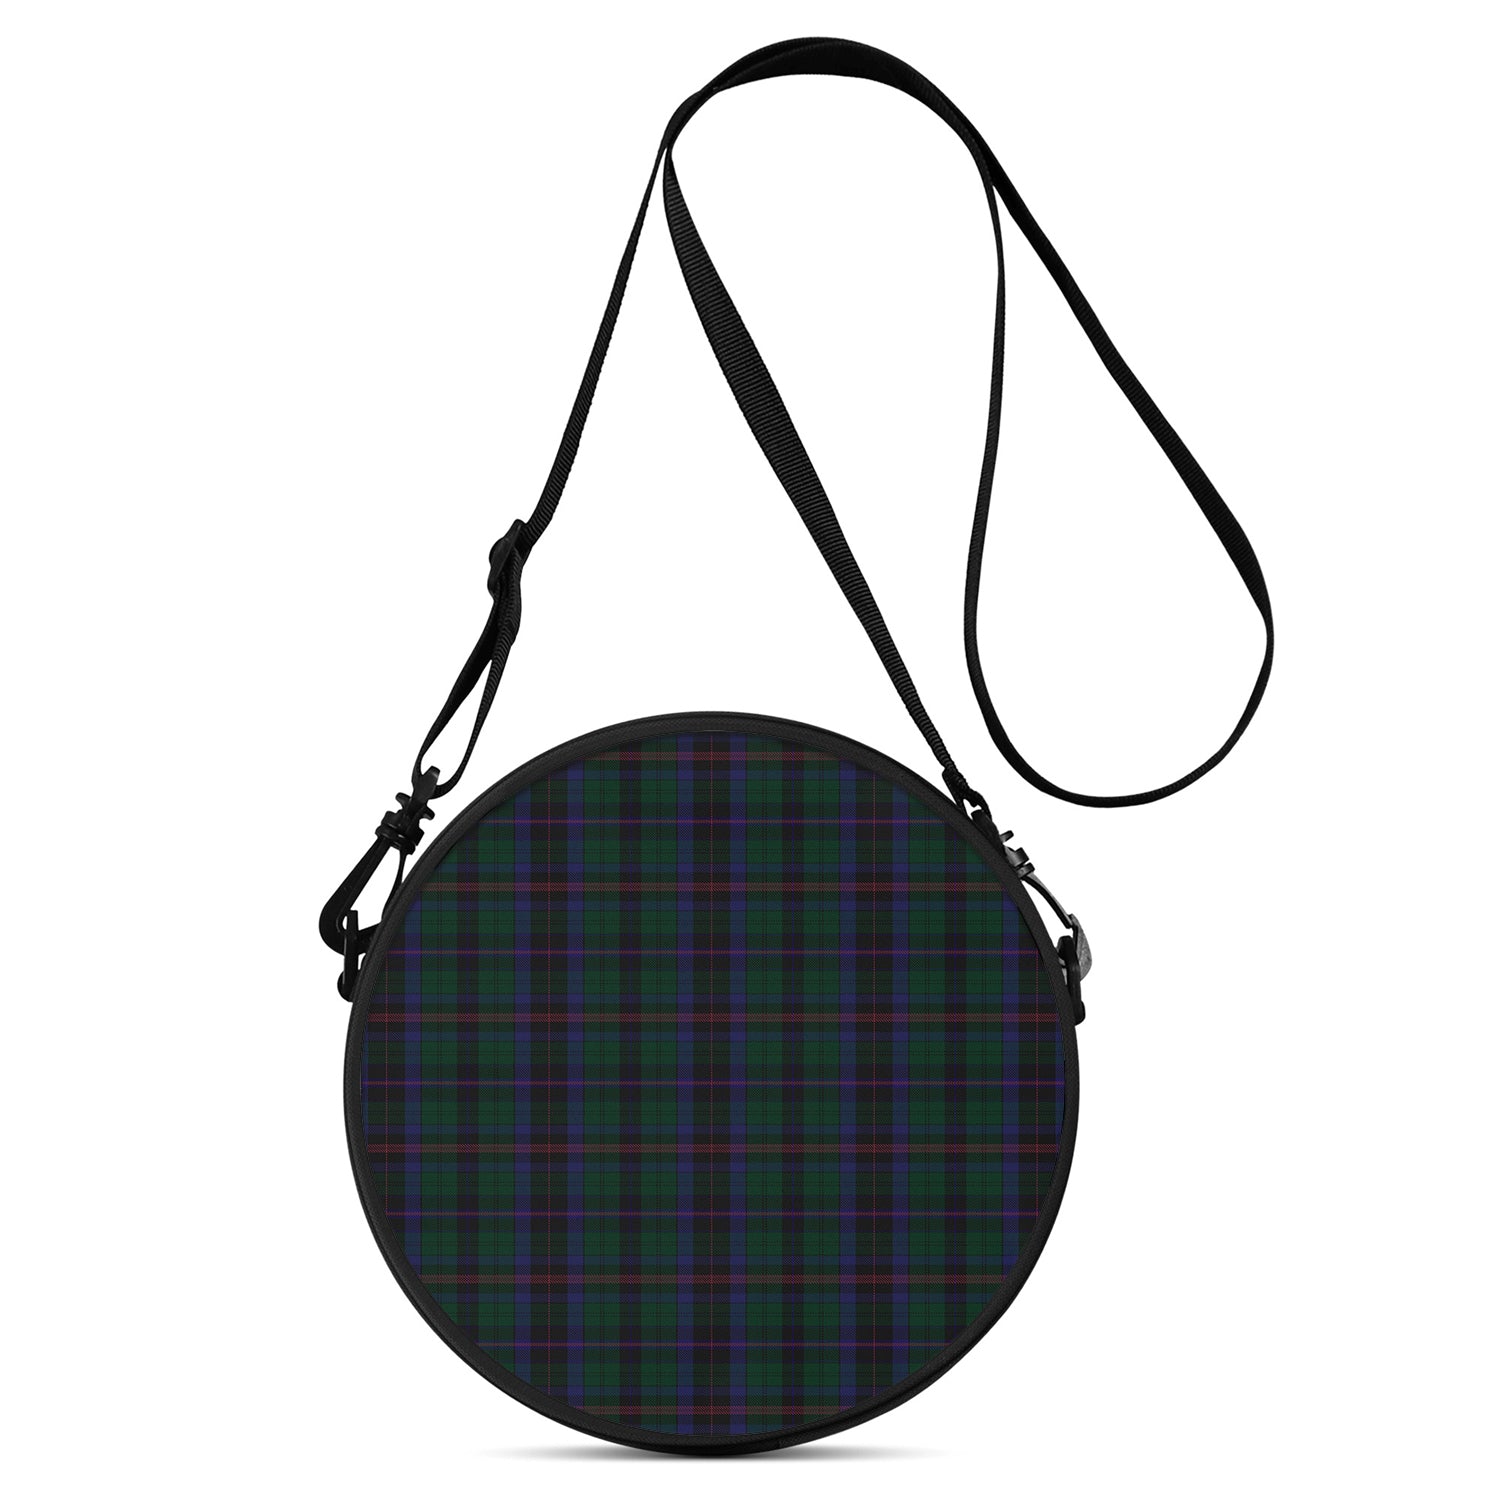 phillips-of-wales-tartan-round-satchel-bags